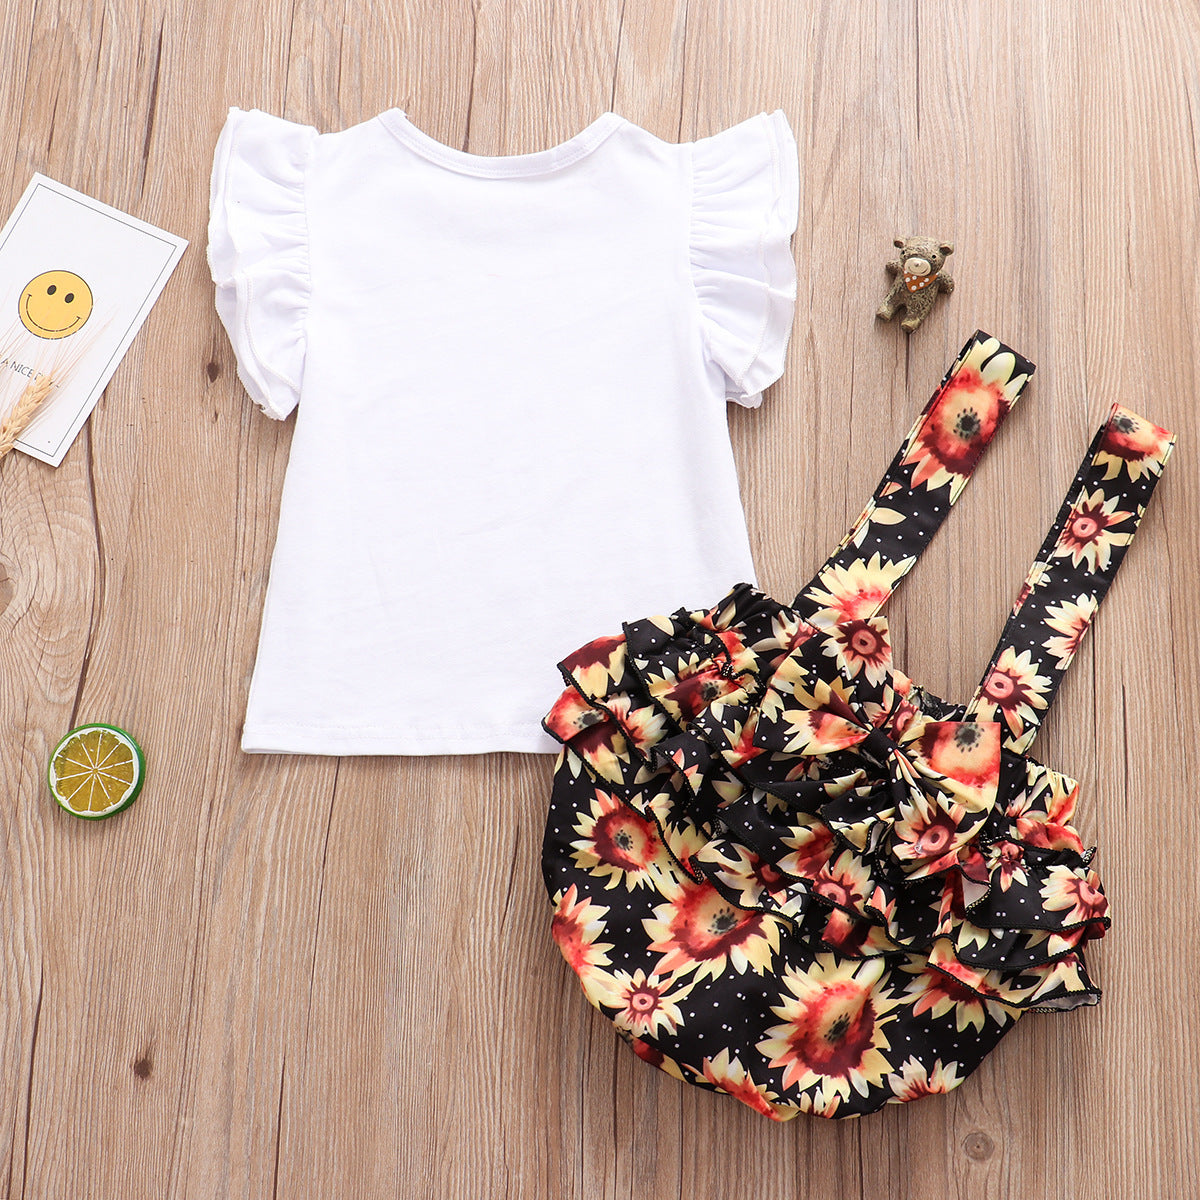 T-shirt Sunflower Suspender Shorts Girls Suit